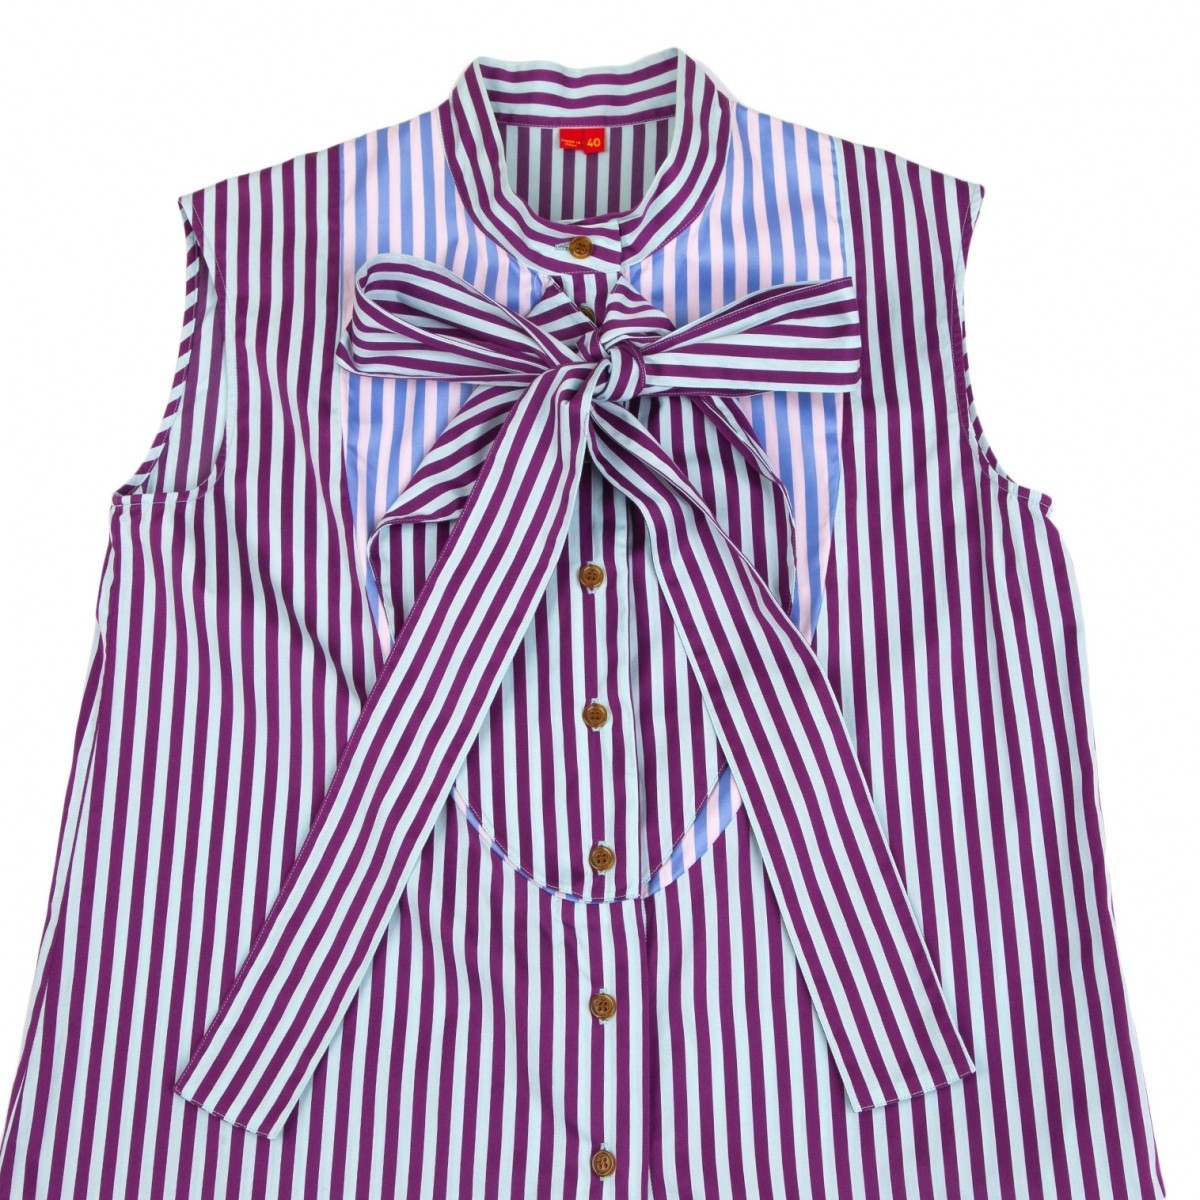  Vivienne Westwood red label stripe front Layered design sleeveless shirt white purple 40